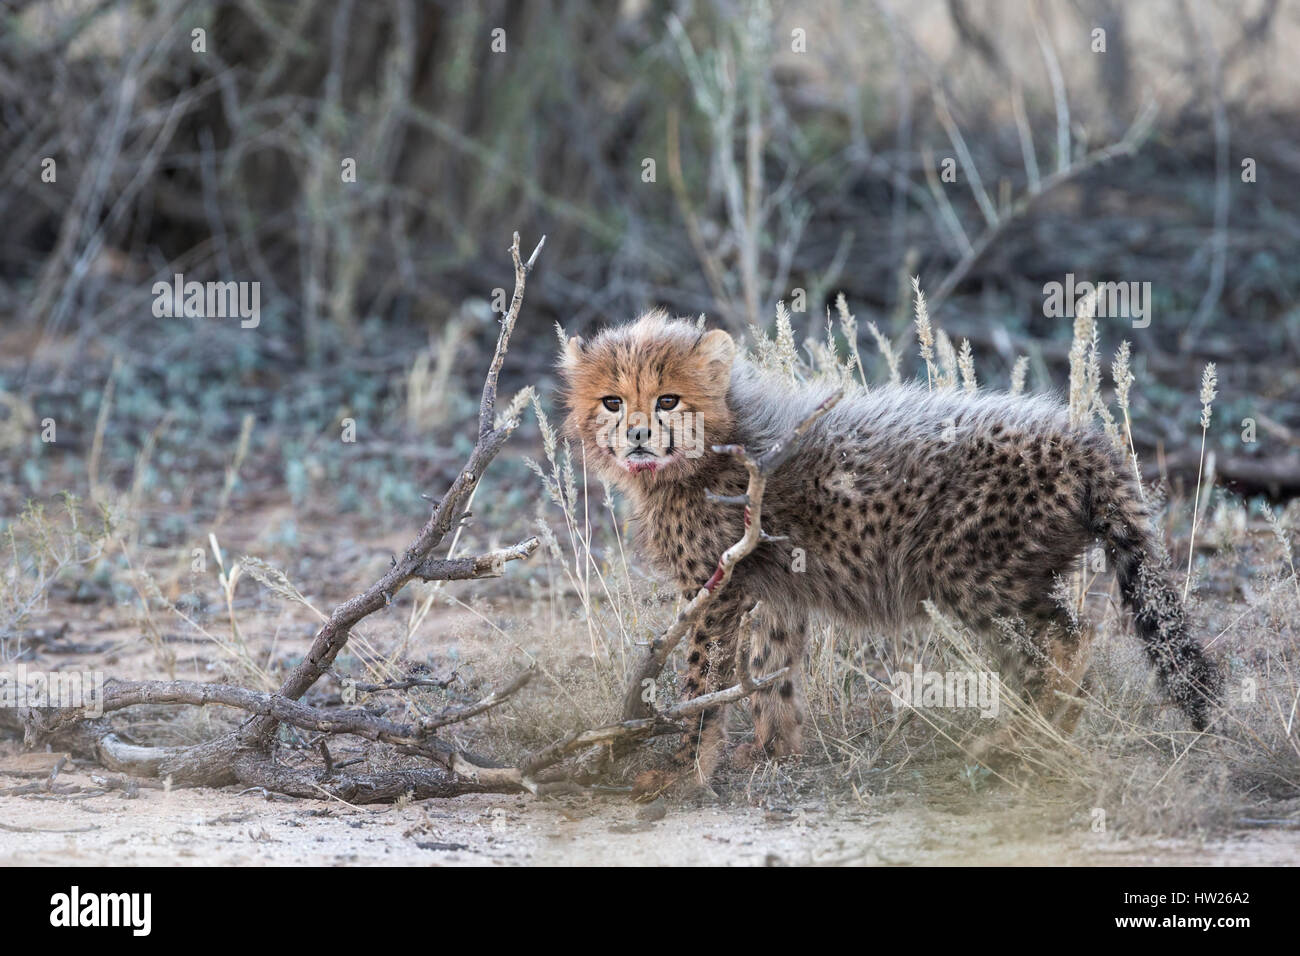 Cheetah (Acinonyx jubatus) cub, Kgalagadi Transfronter Park, Northern Cape, South Africa, June 2016 Stock Photo